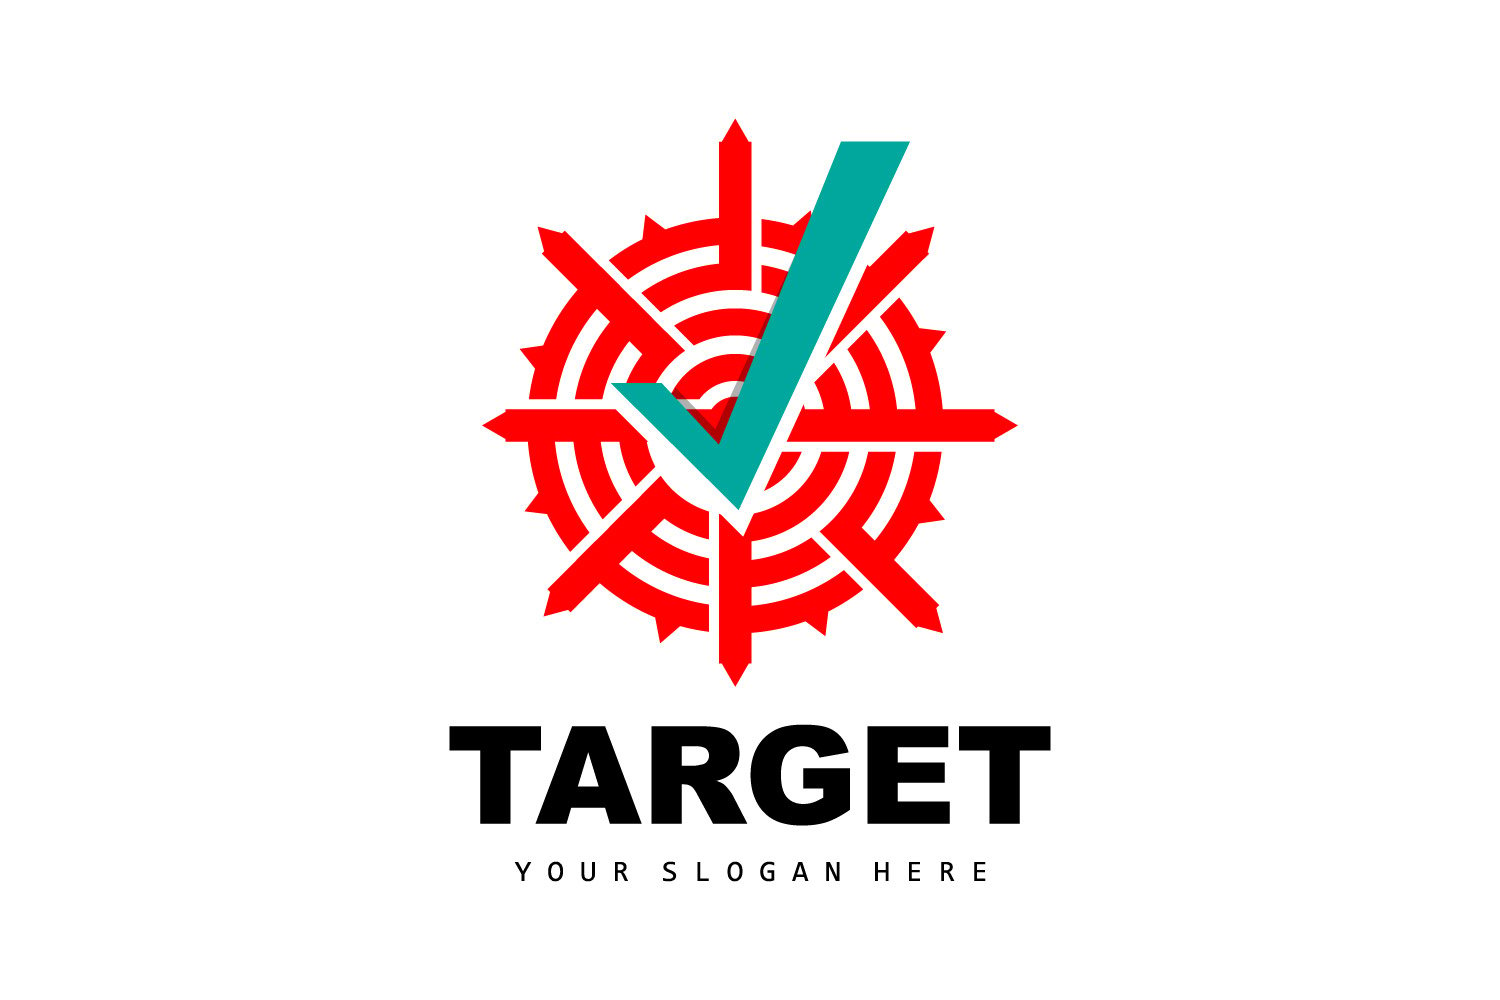 Template #405725 Vector Target Webdesign Template - Logo template Preview